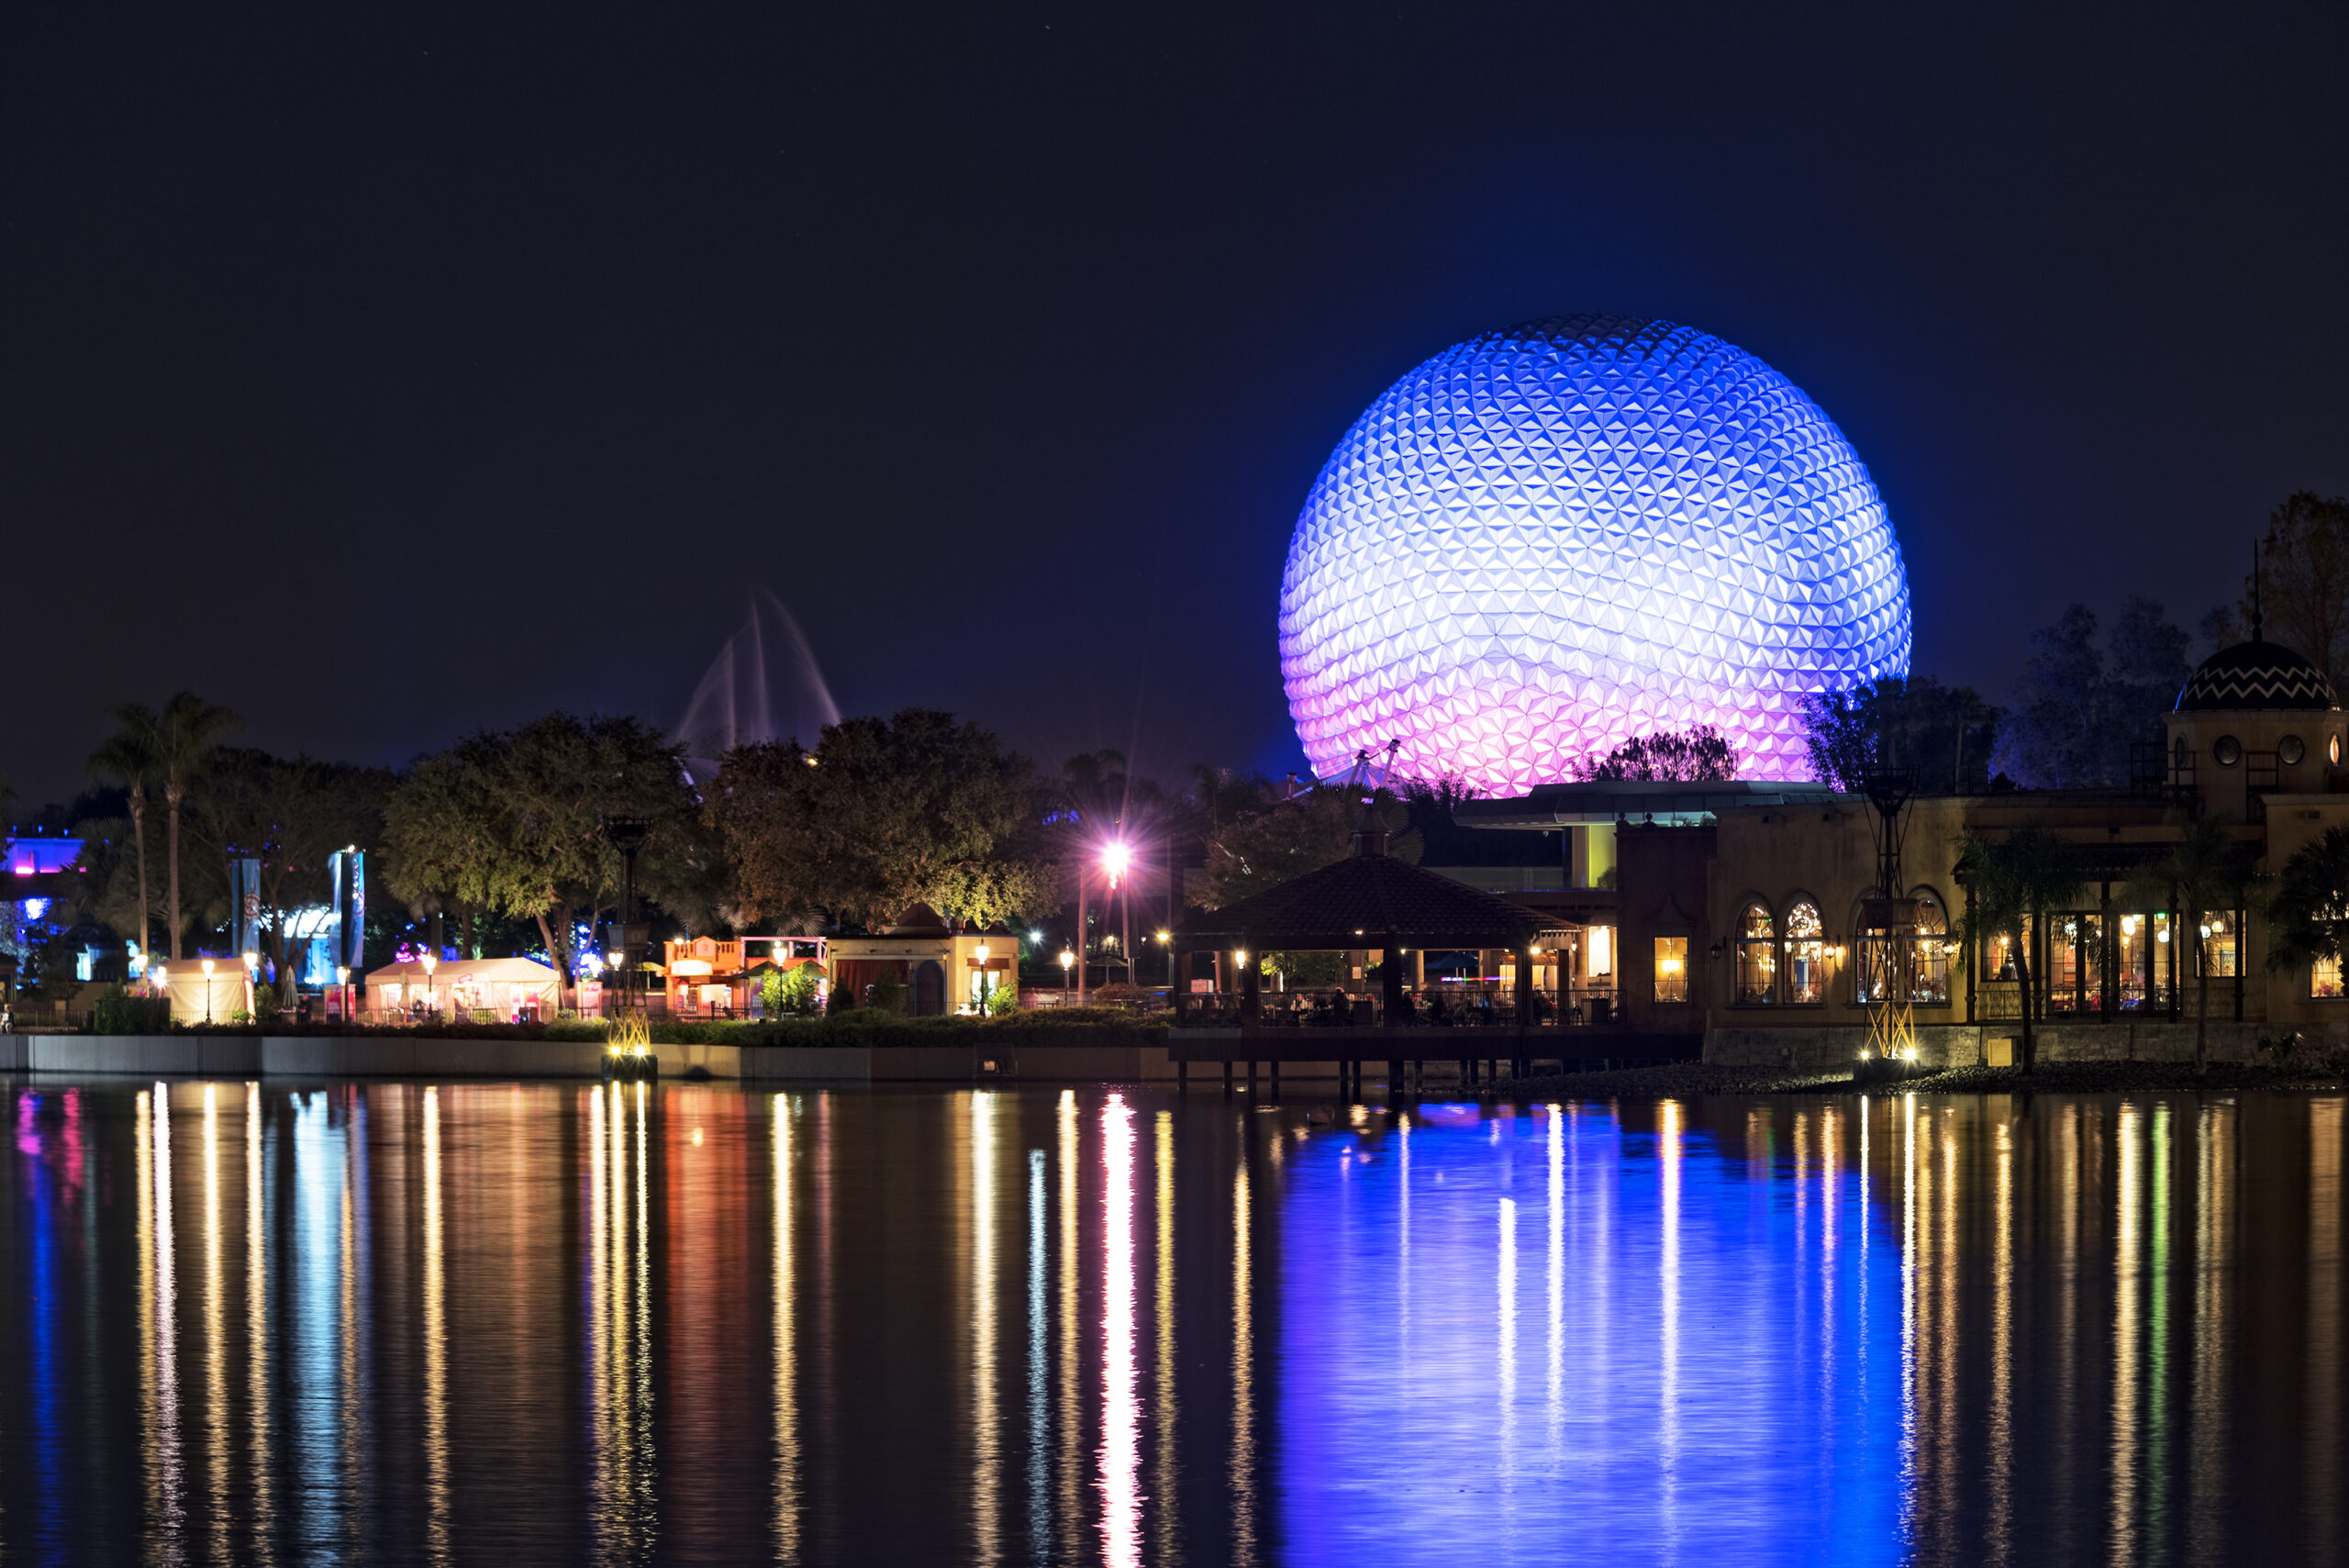 Orlando FL USA January 30 2017 The Spaceship Earth Sphere at Epcot Center Illuminated At Night in Walt Disney World in Orlando Florida